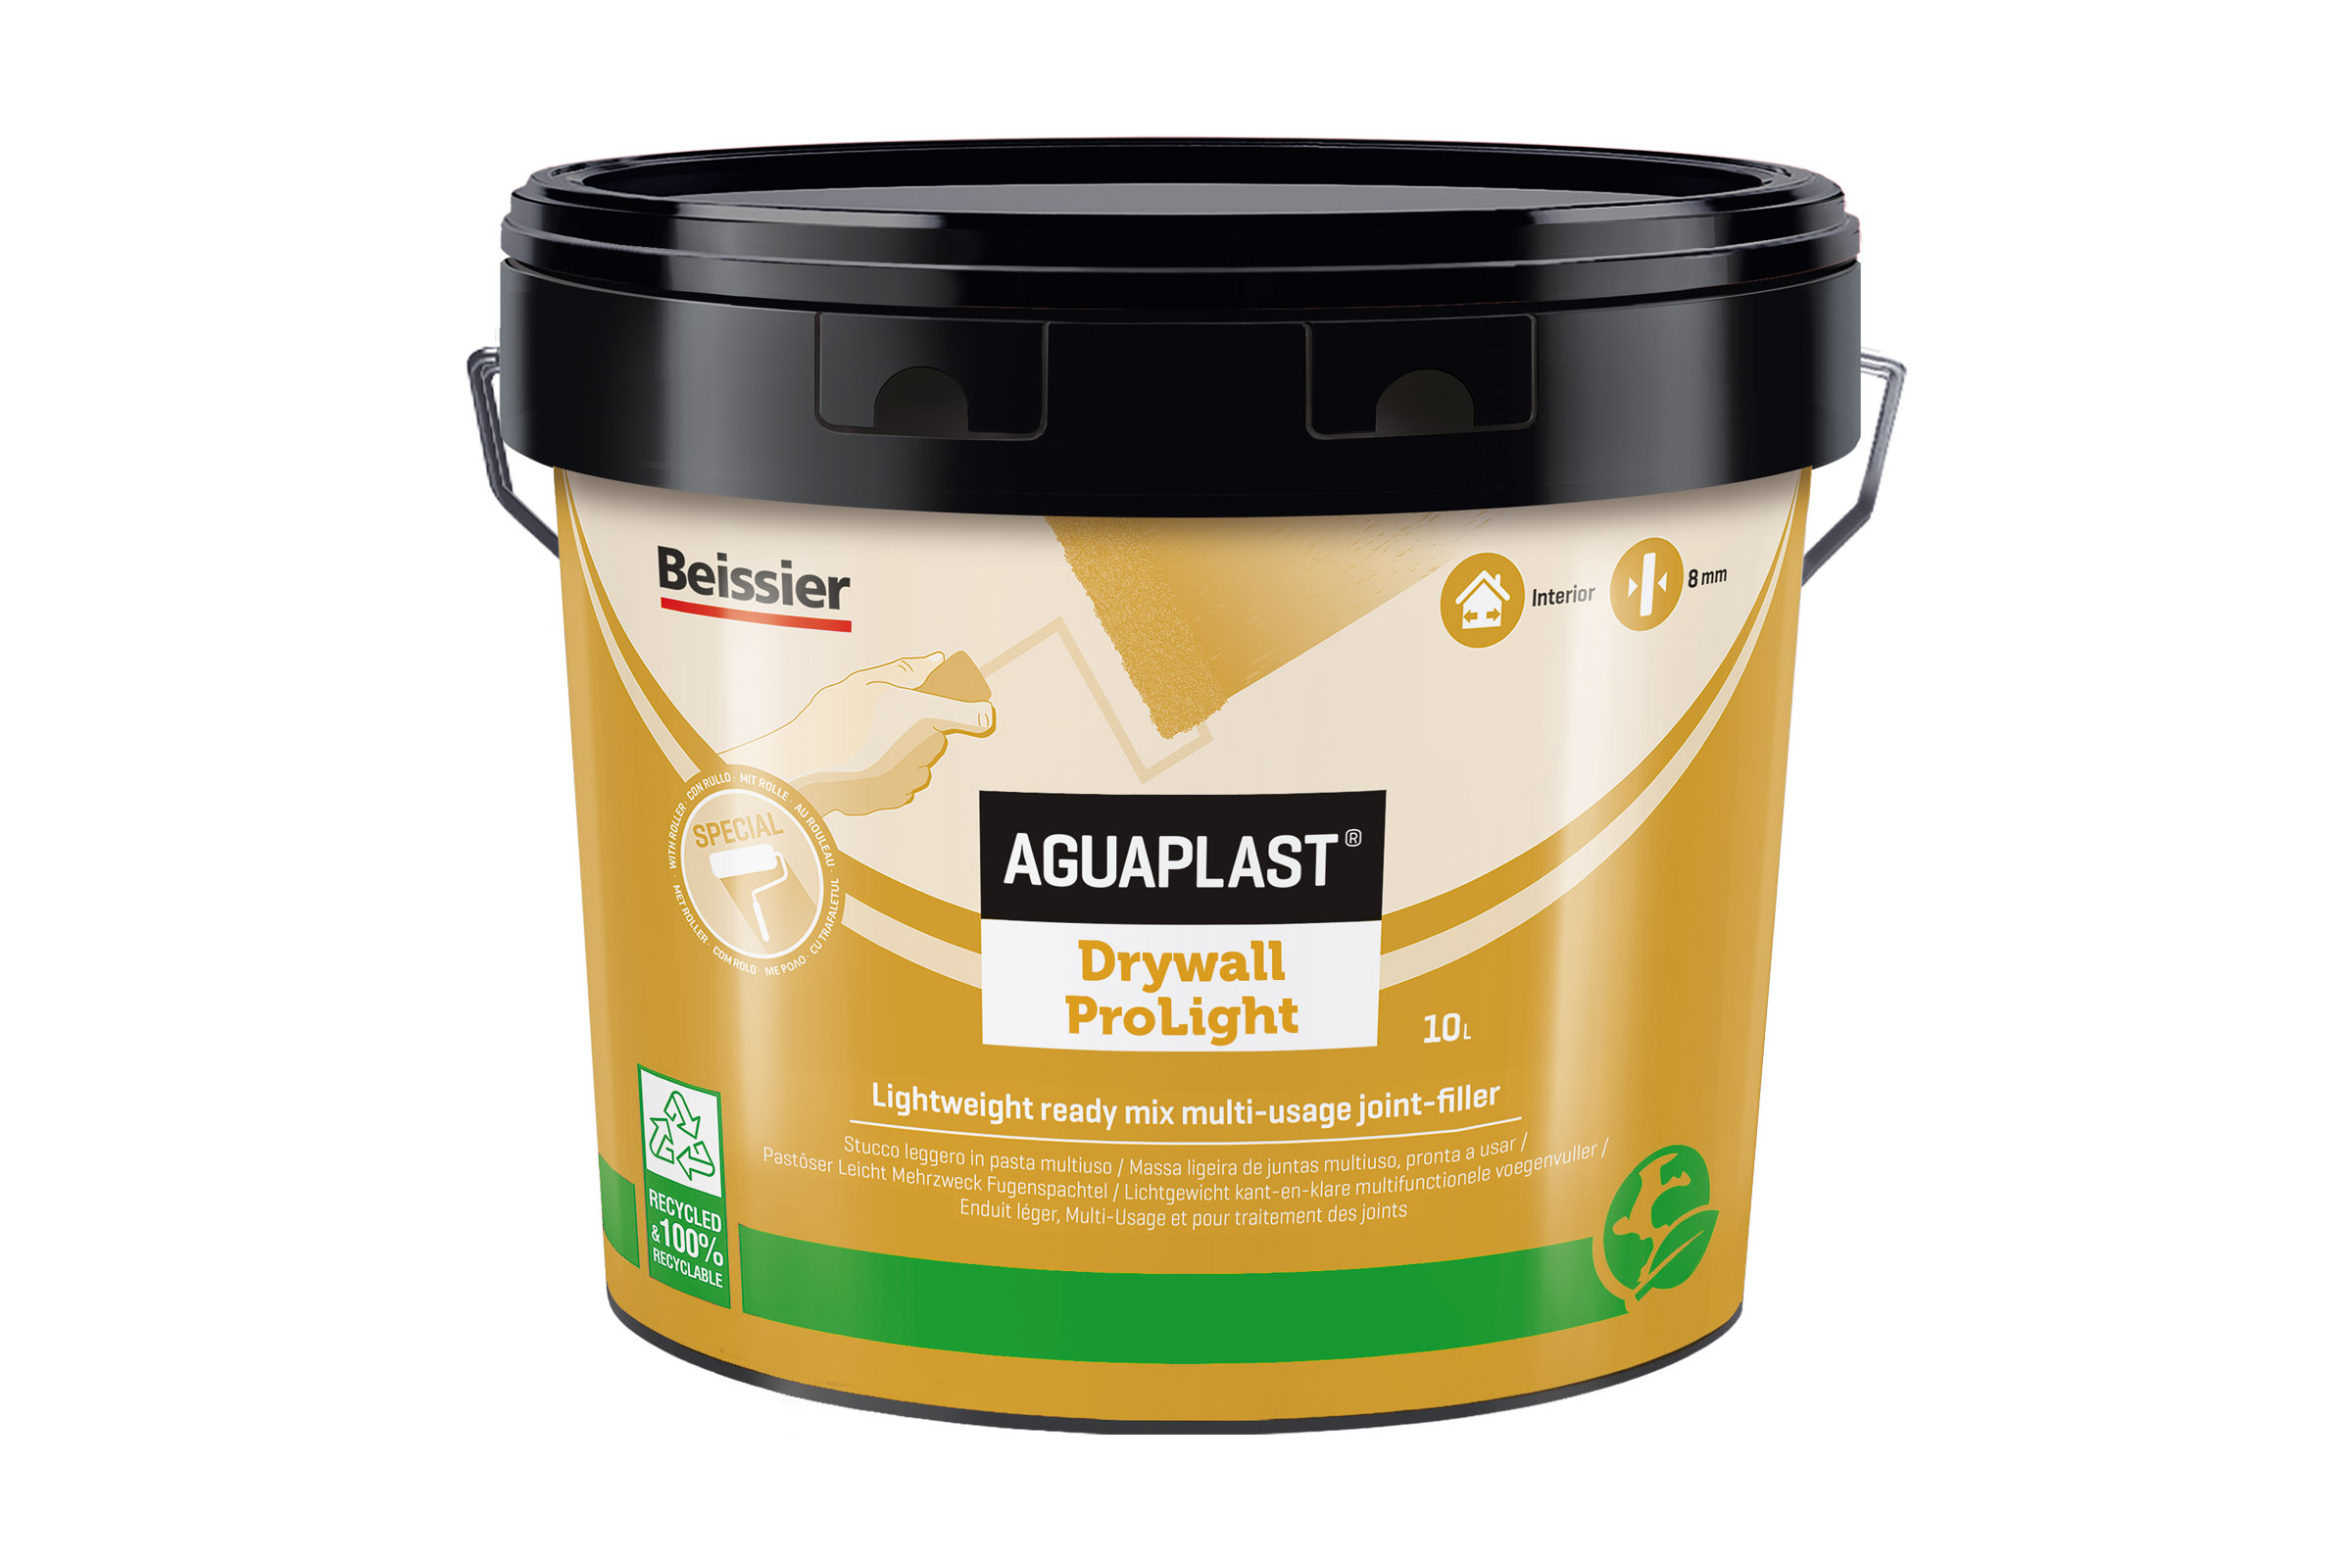 Aguaplast Drywall Prolight